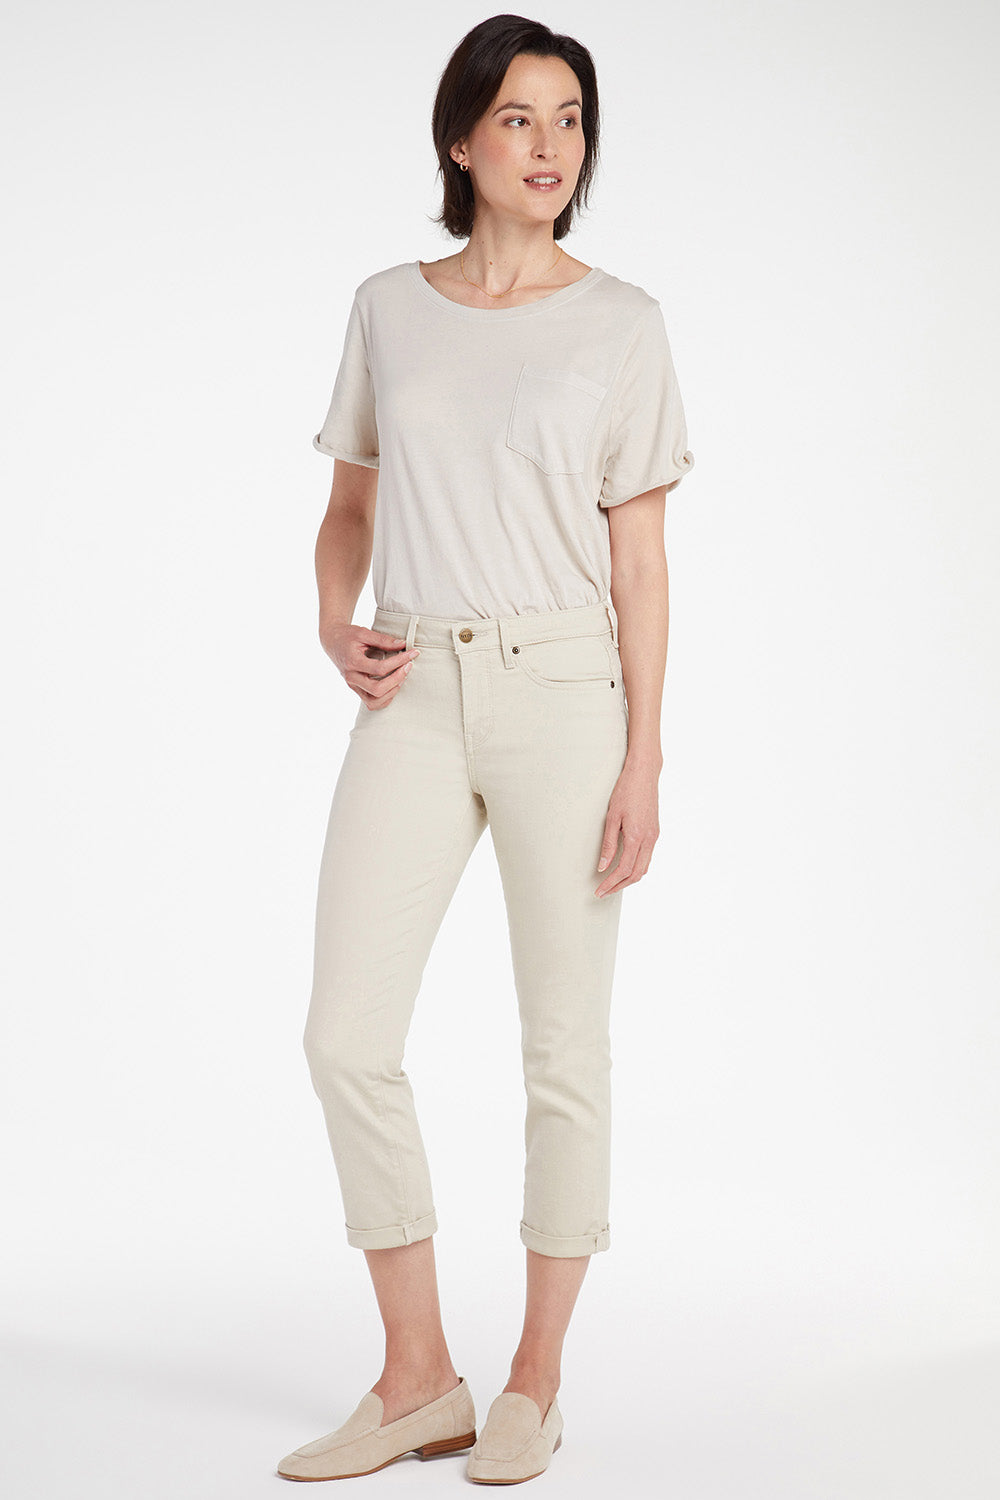 Chloe Skinny Capri Jeans With Roll Cuffs - Feather Tan | NYDJ